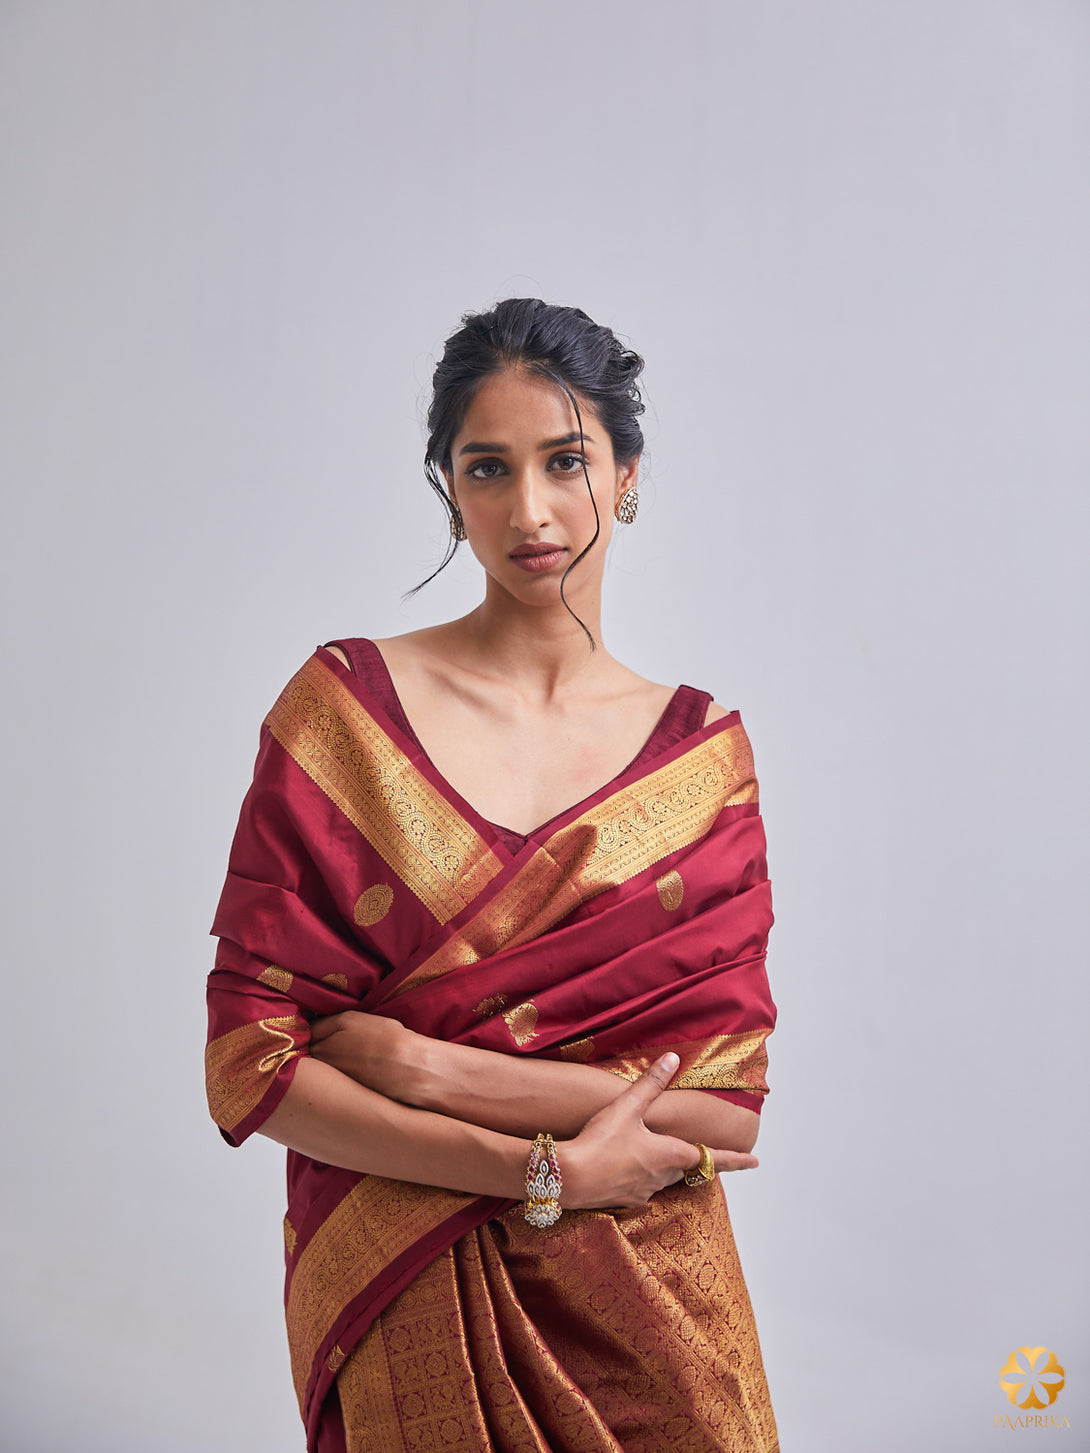 Timeless Maroon Handwoven Kanjivaram Saree - Elegance and Tradition Unveiled.